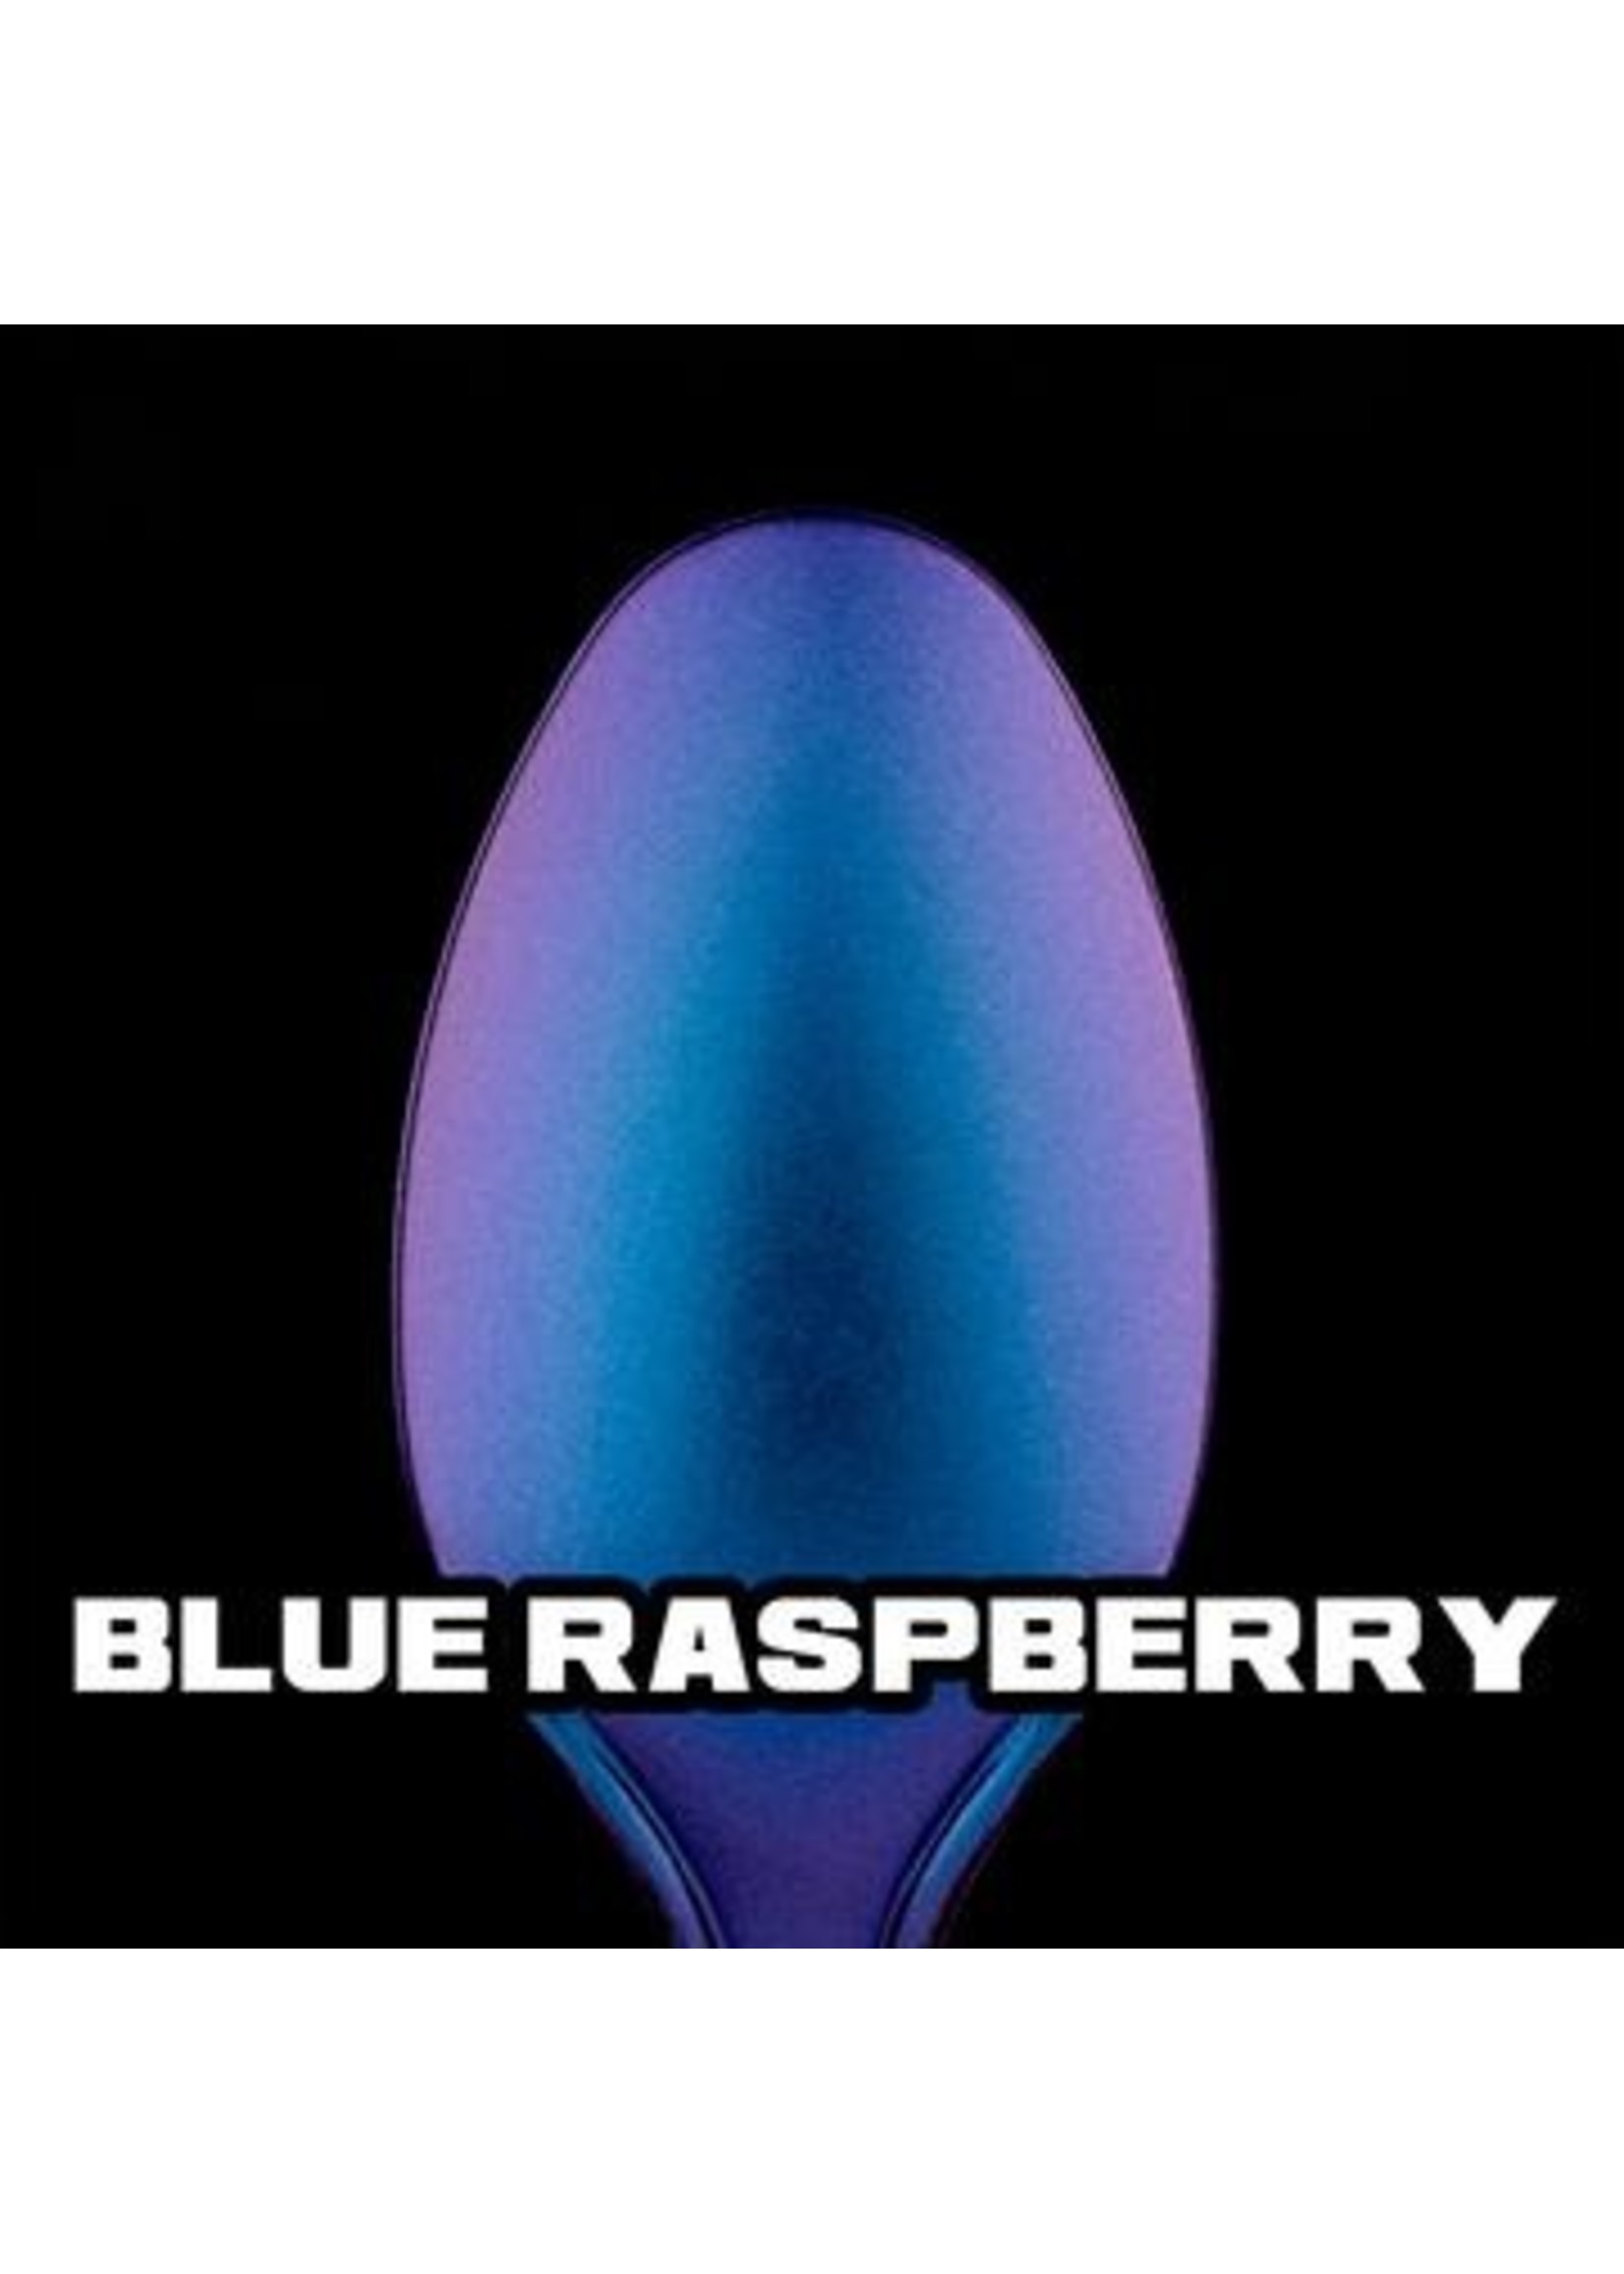 Turbo Dork Blue Raspberry Turboshift Acrylic Paint - 20ml Bottle